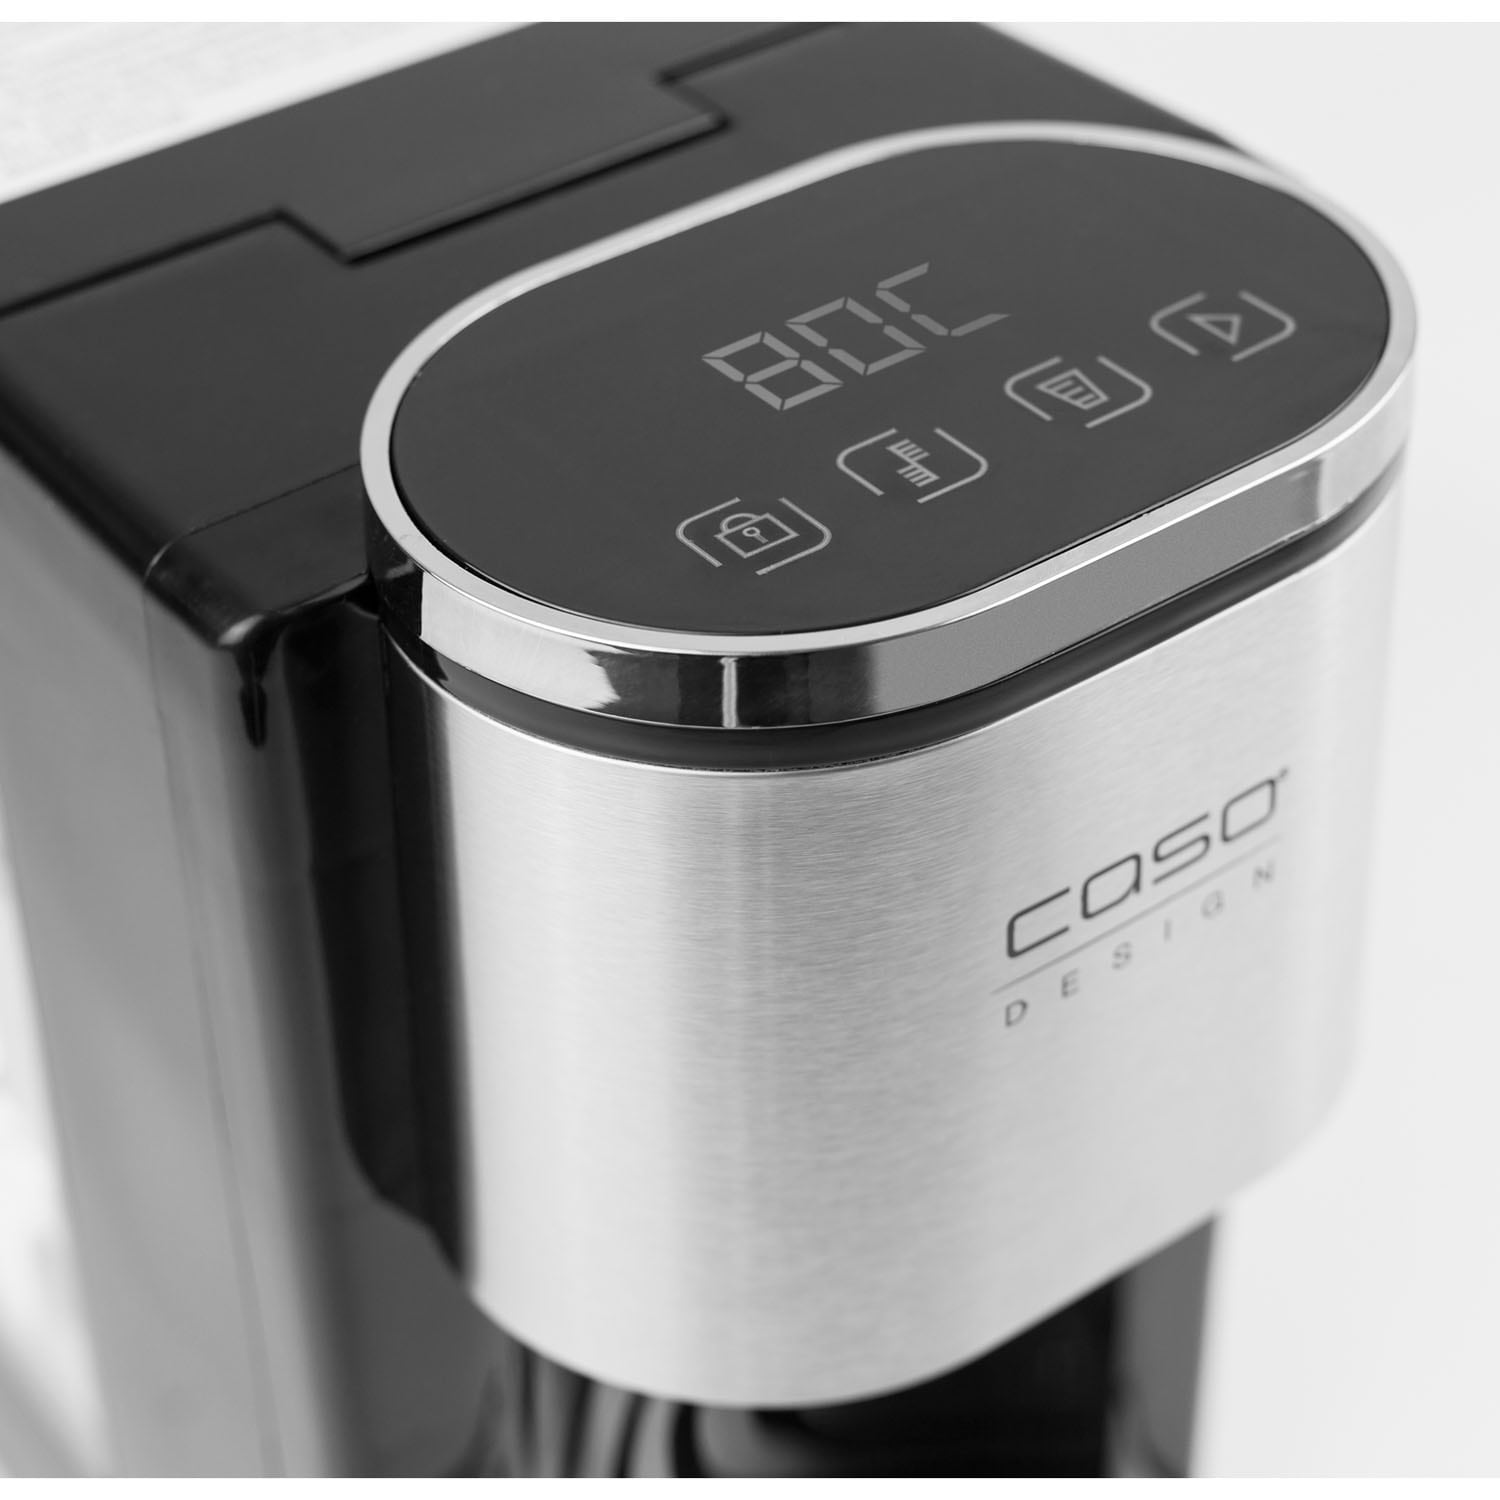 Caso Design HW 500 Touch Turbo 8-Second Boil Hot Water Dispenser